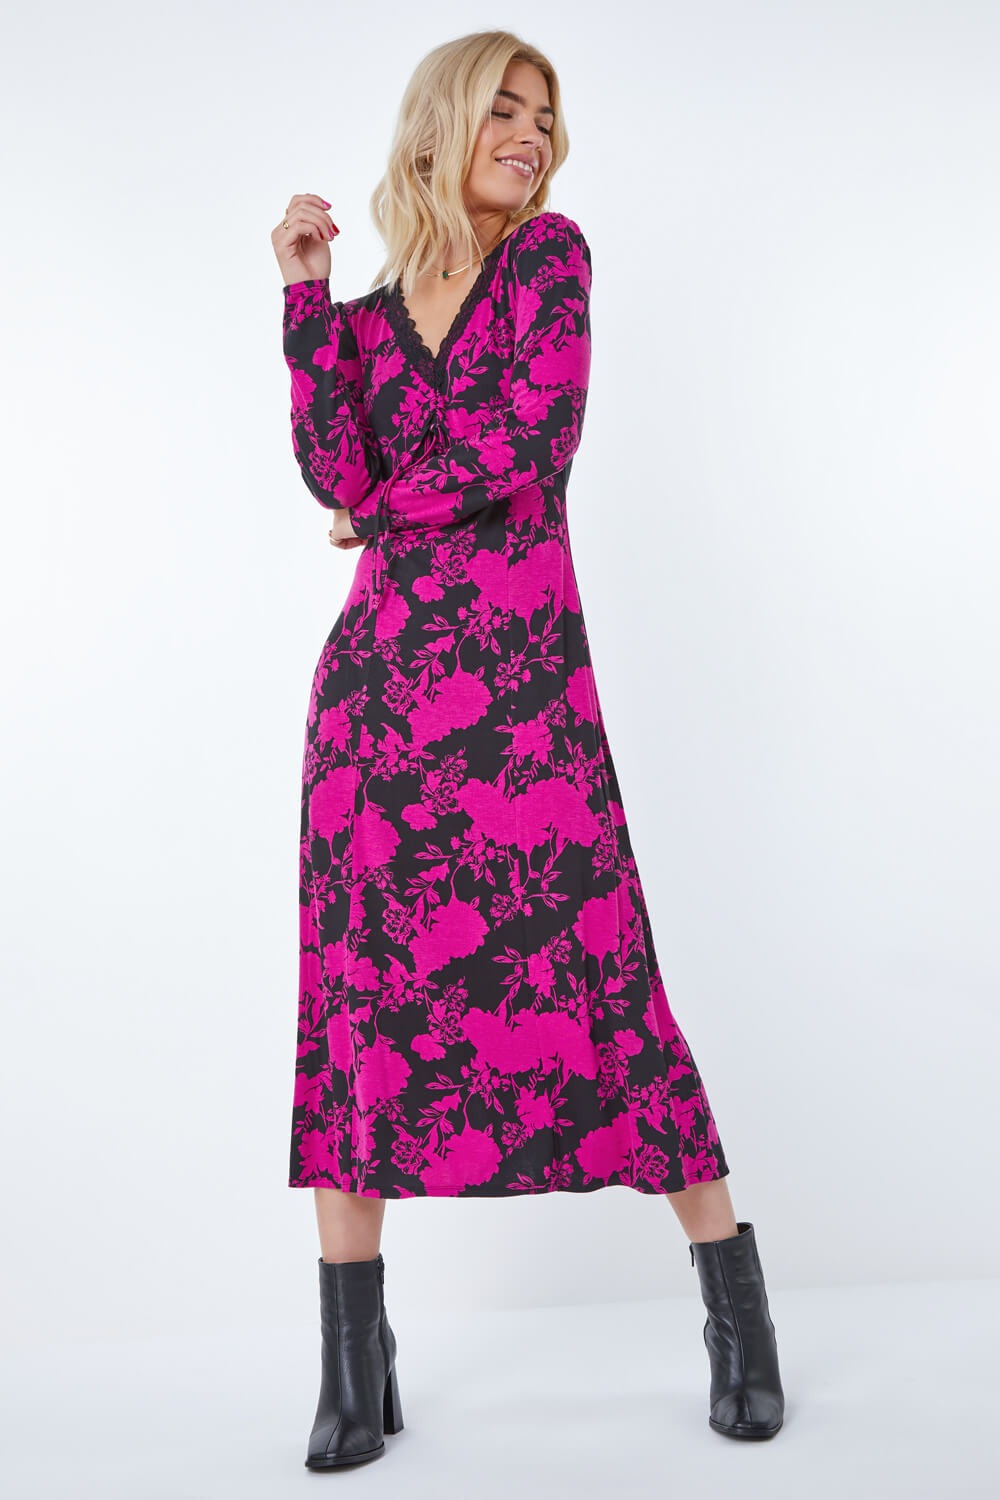 Fushcia Floral Print Lace Trim Midi Dress, Image 2 of 5